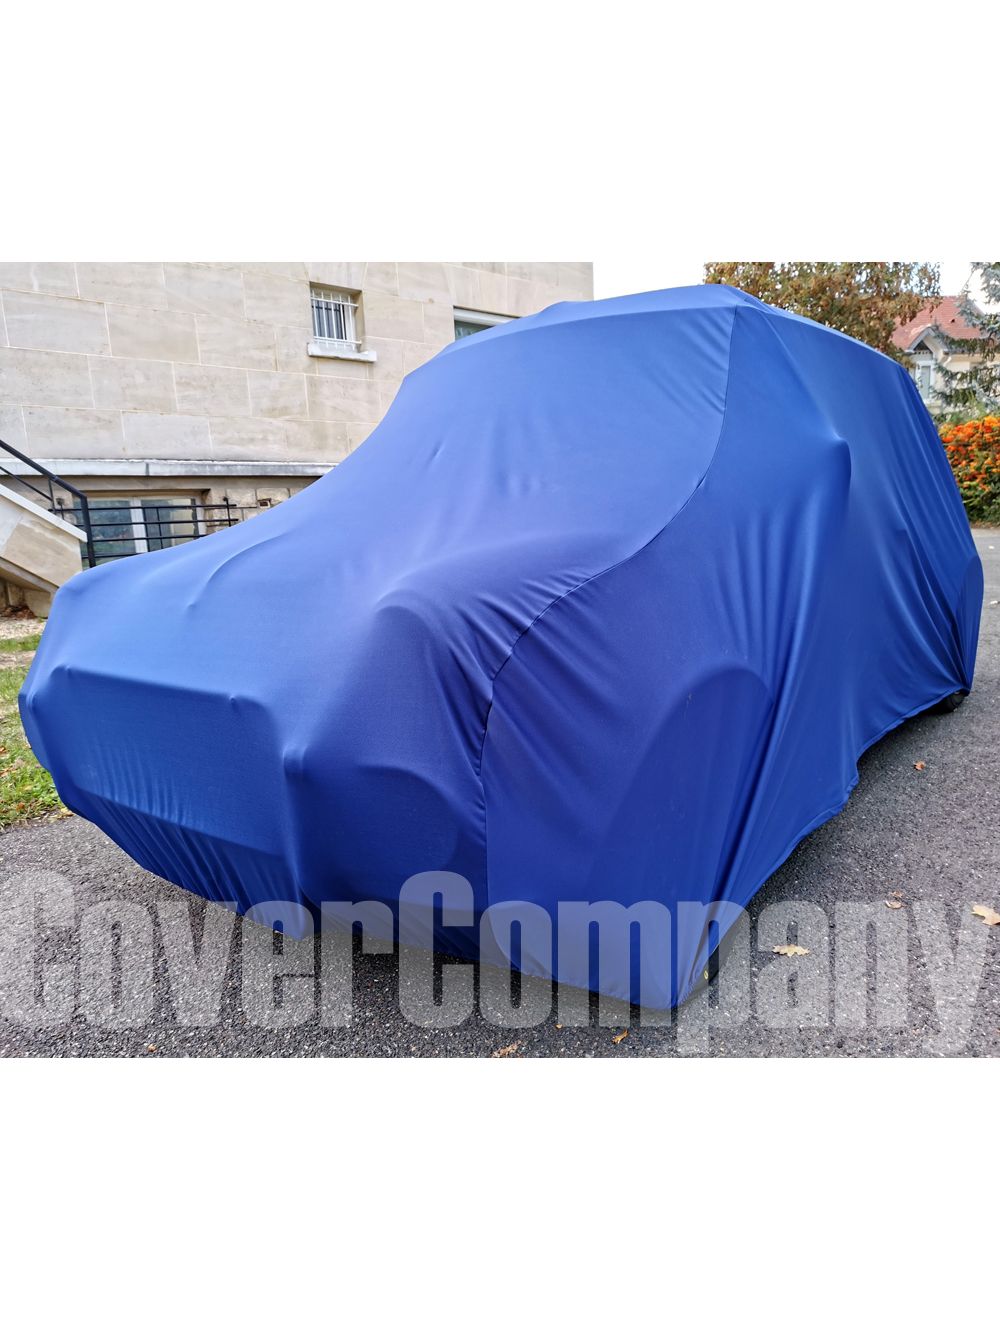 Standard Fit Car Cover for Mini - Indoor Bronze Range